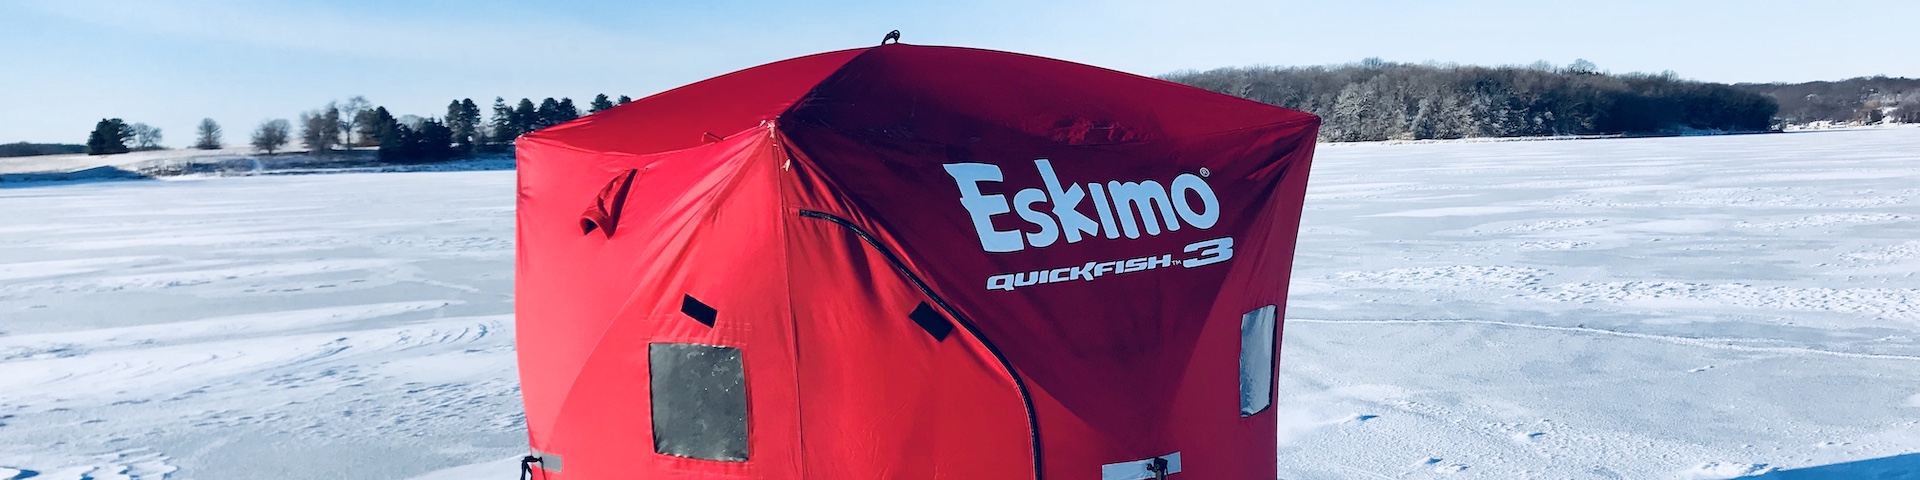 Eskimo QuickFish 3 Ice Fishing Shelter Review - EatnLunch Fishing